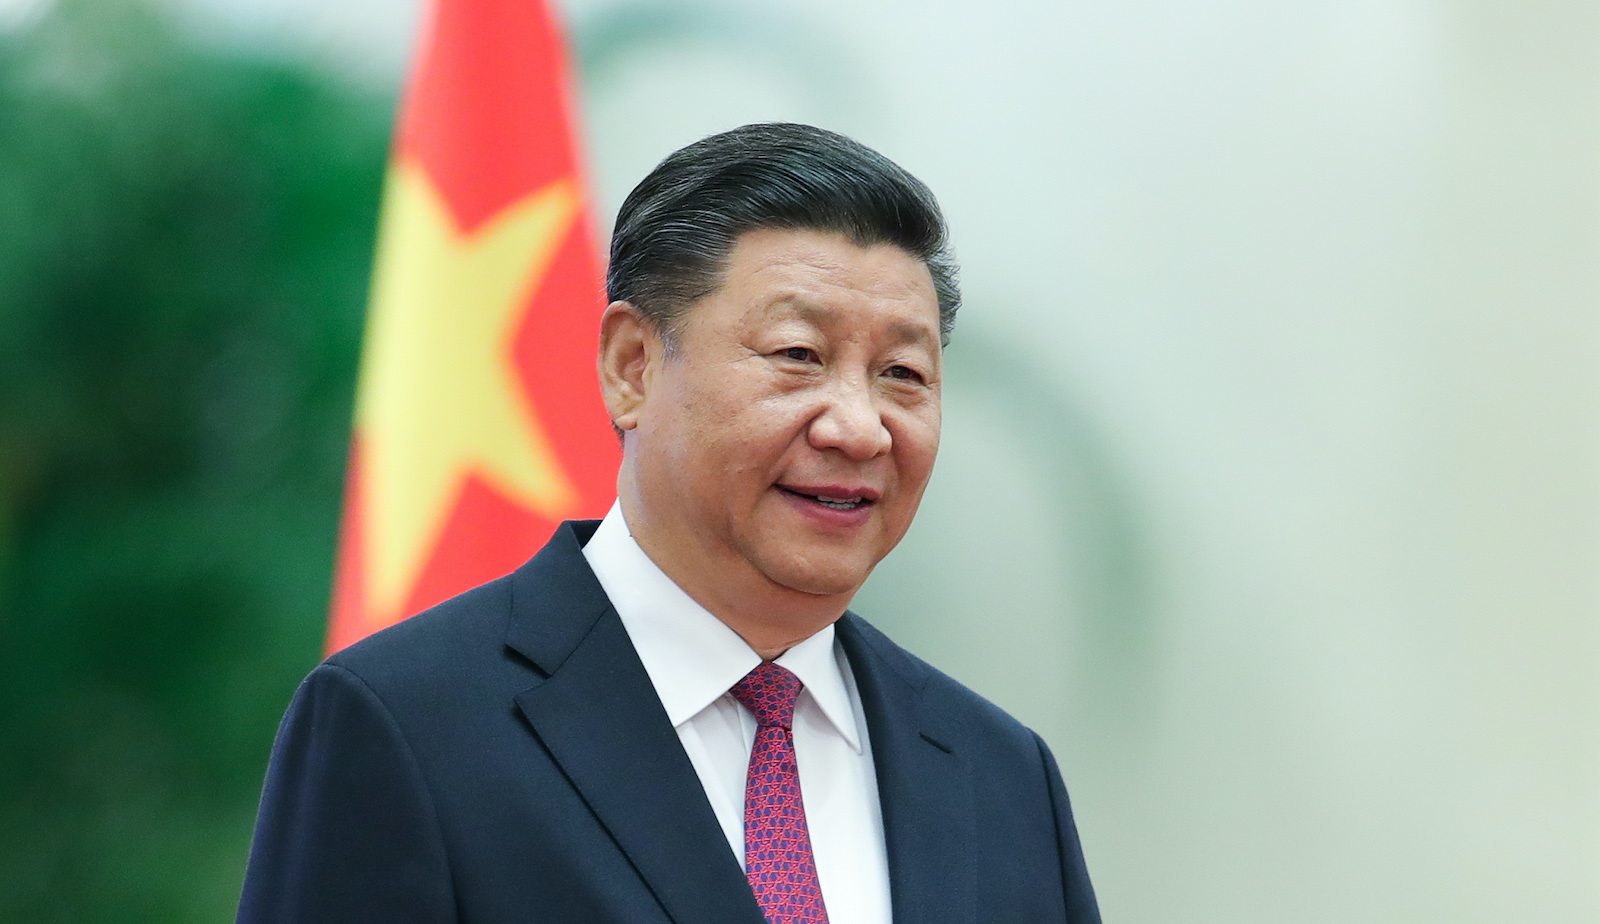 Monacan Head Of State Prince Albert II Visits China